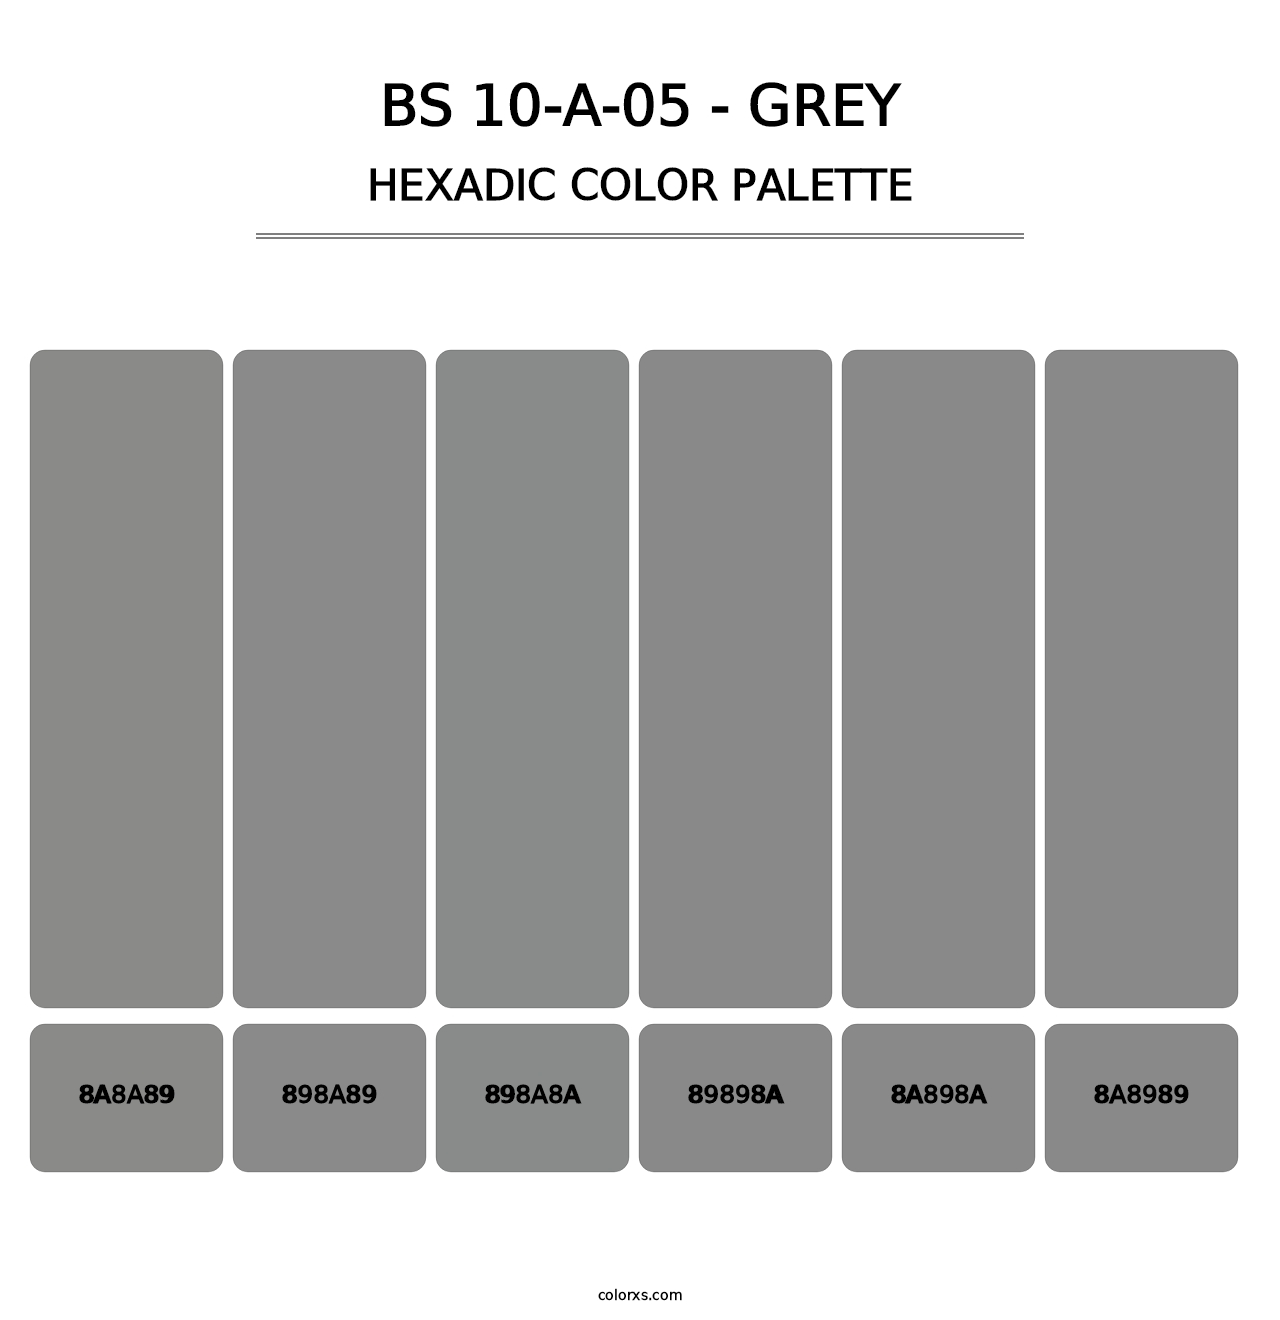 BS 10-A-05 - Grey - Hexadic Color Palette